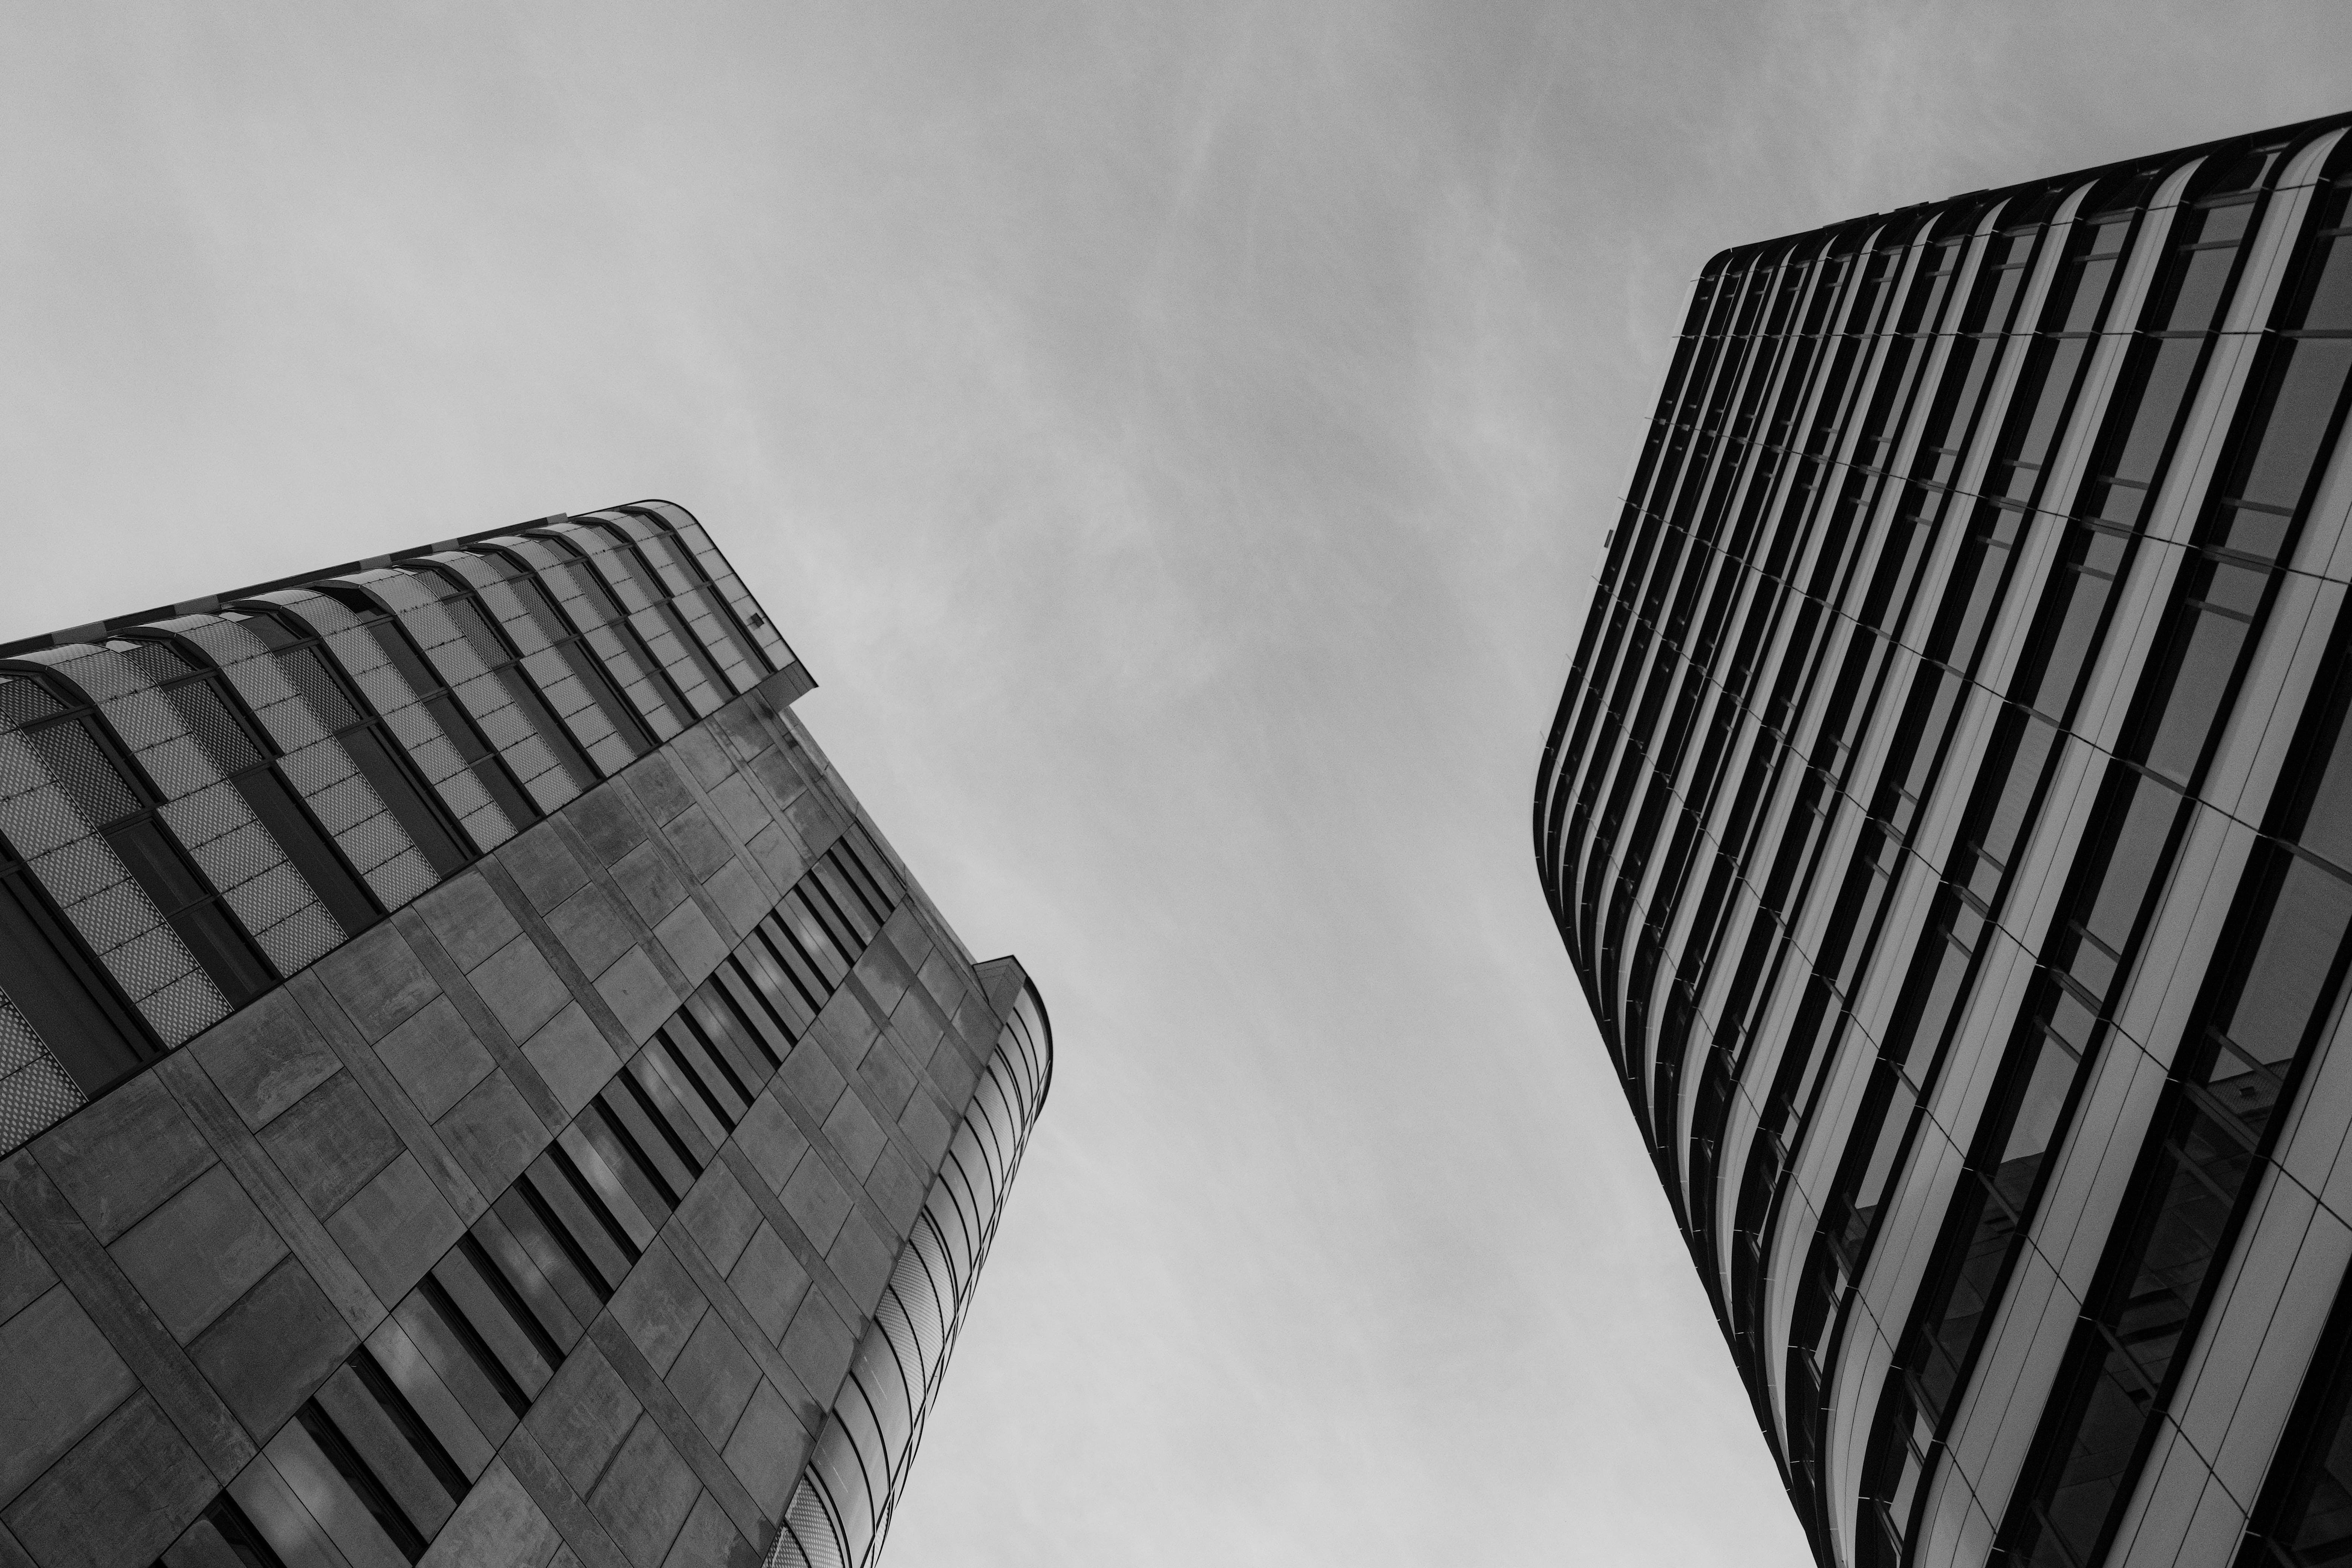 Upward shot of two tall buildings